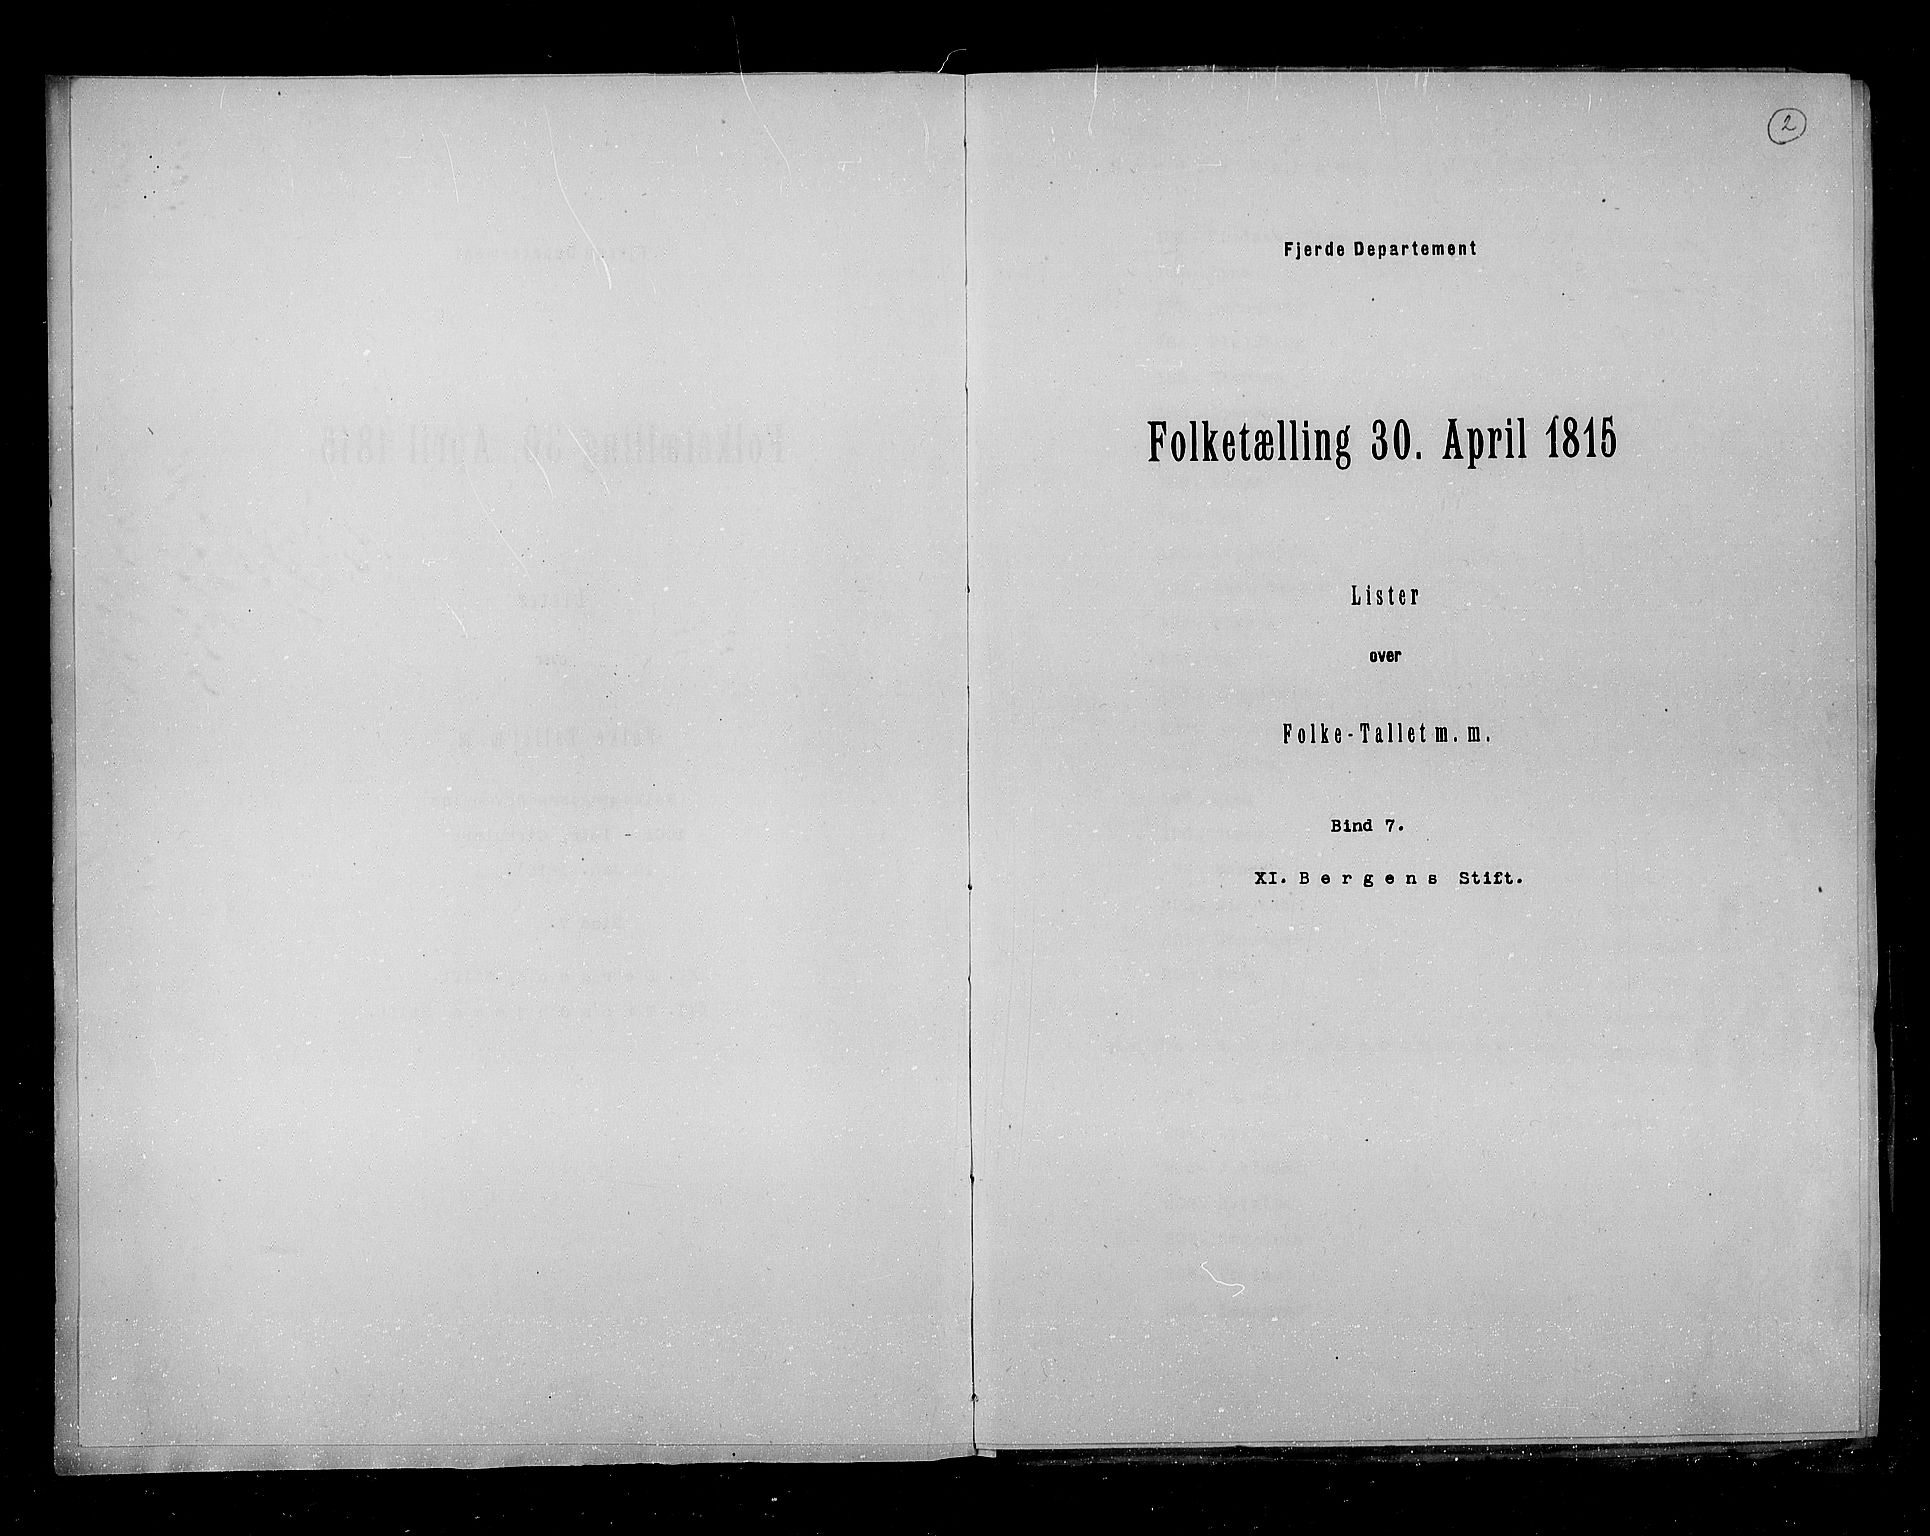 RA, Folketellingen 1815, bind 7: Folkemengdens bevegelse i Bergen stift og Trondheim stift, 1815, s. 2